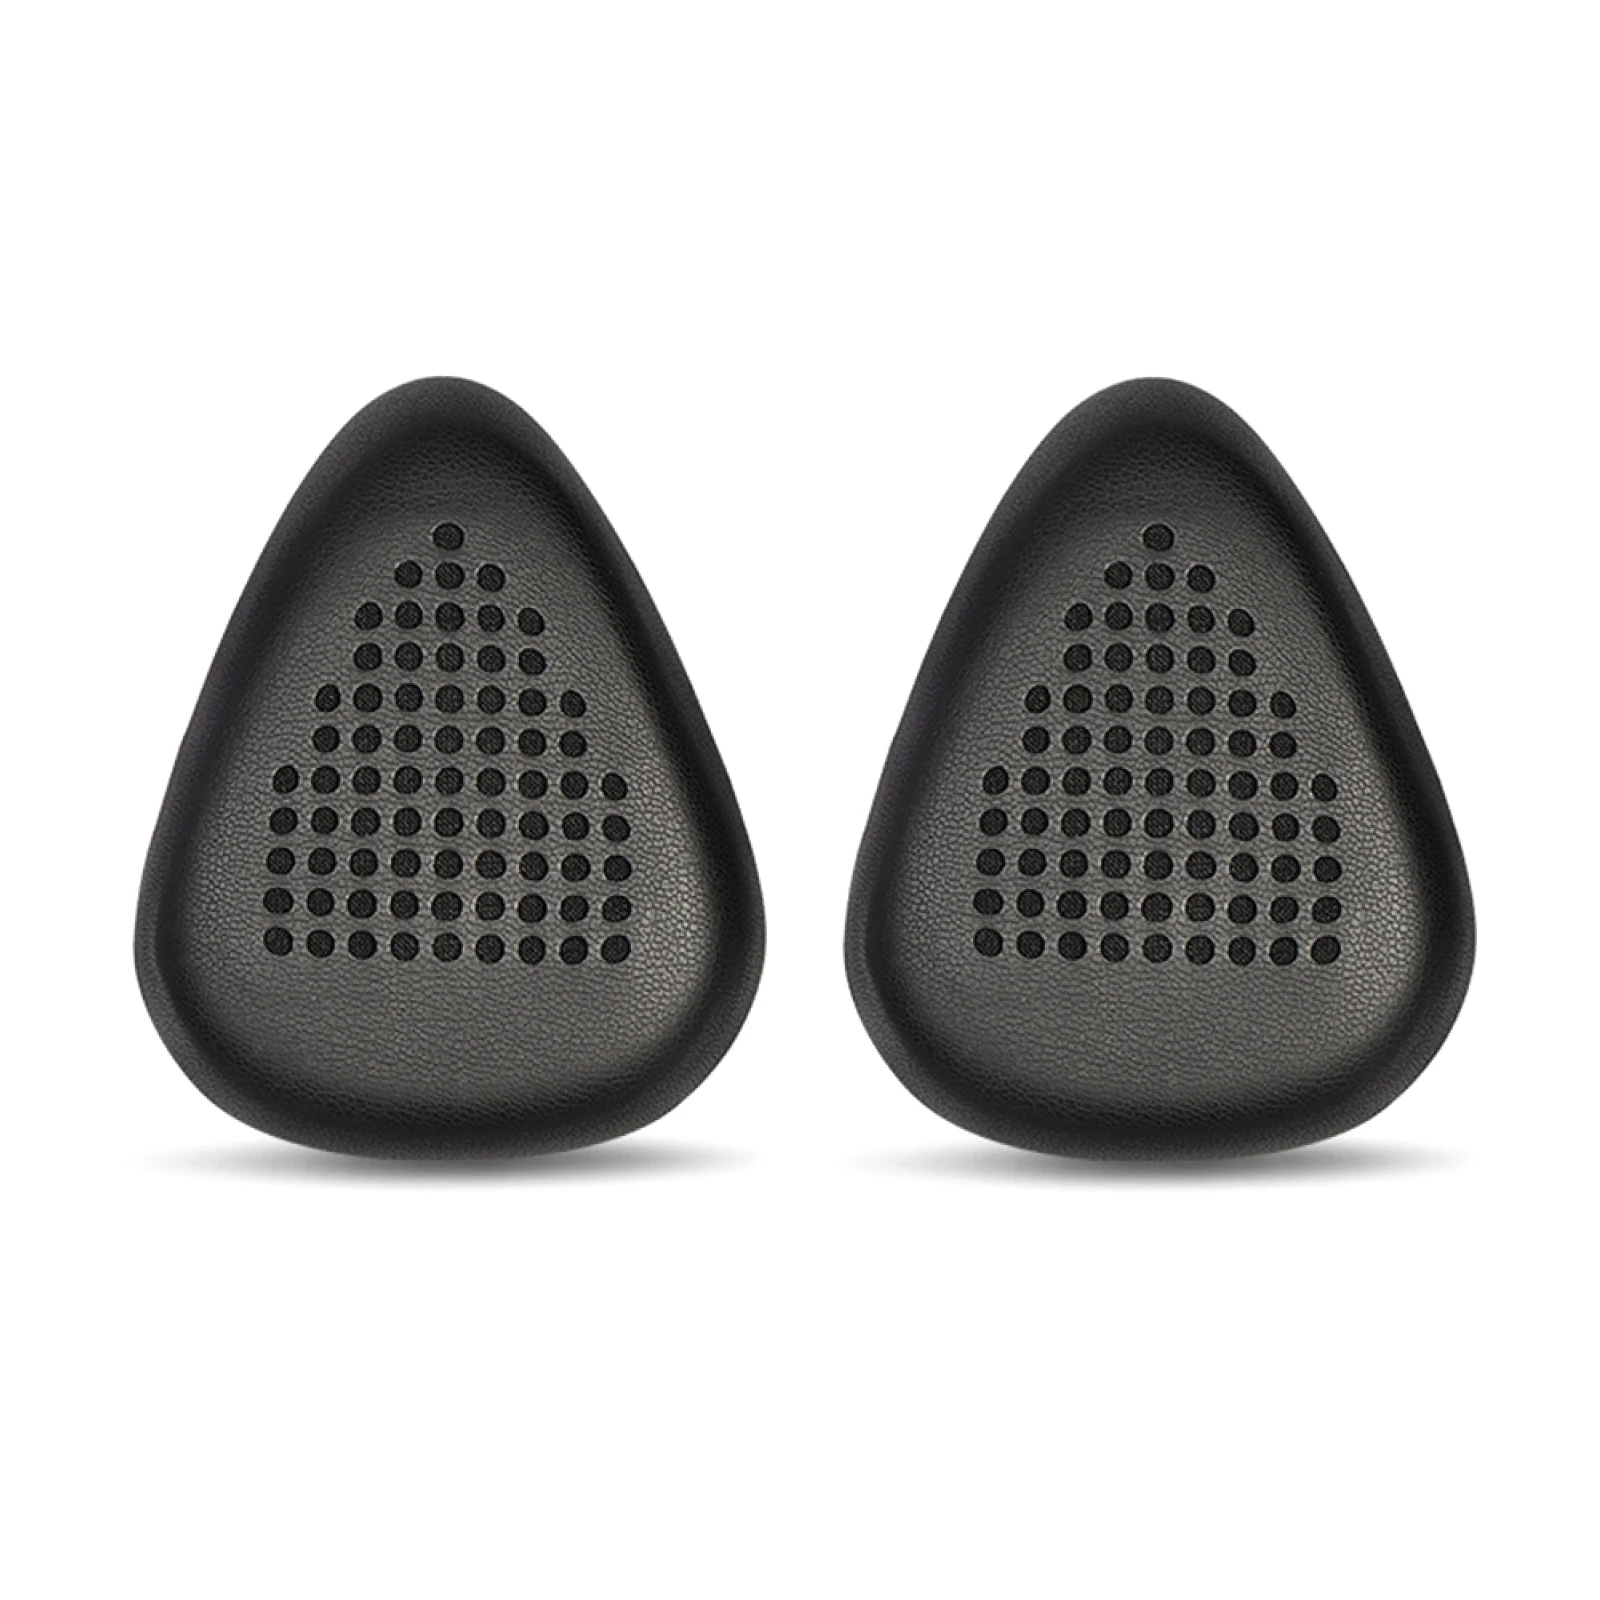 1 Pair Soft Sponge Ear Pads Headsets Cushion Covers Headband Replacement Repair Parts For Razer Dva Meka Headphones Accessories